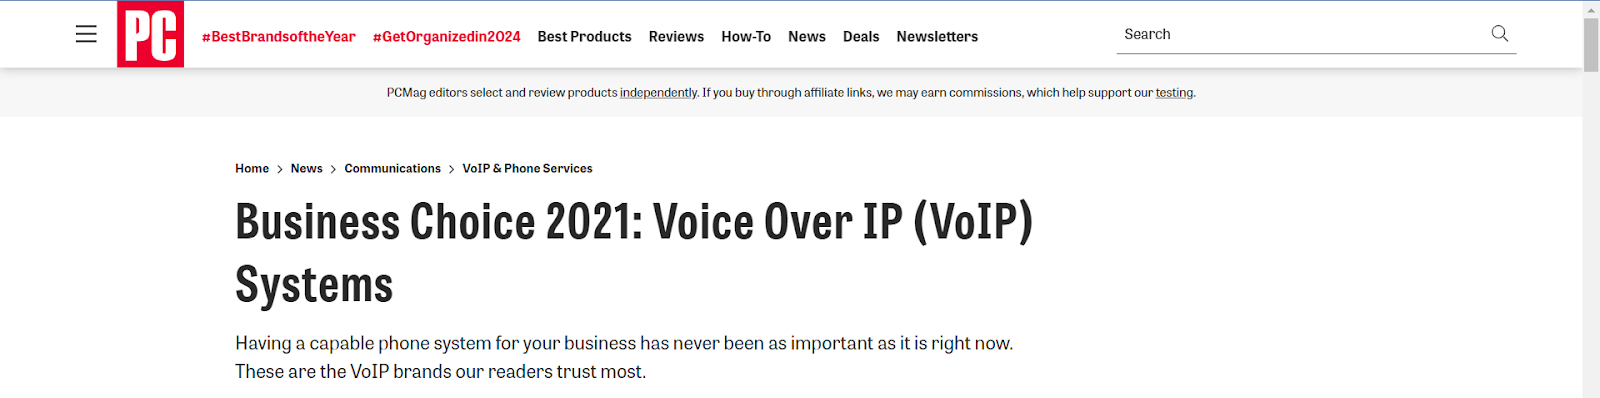 Vocice Over IP